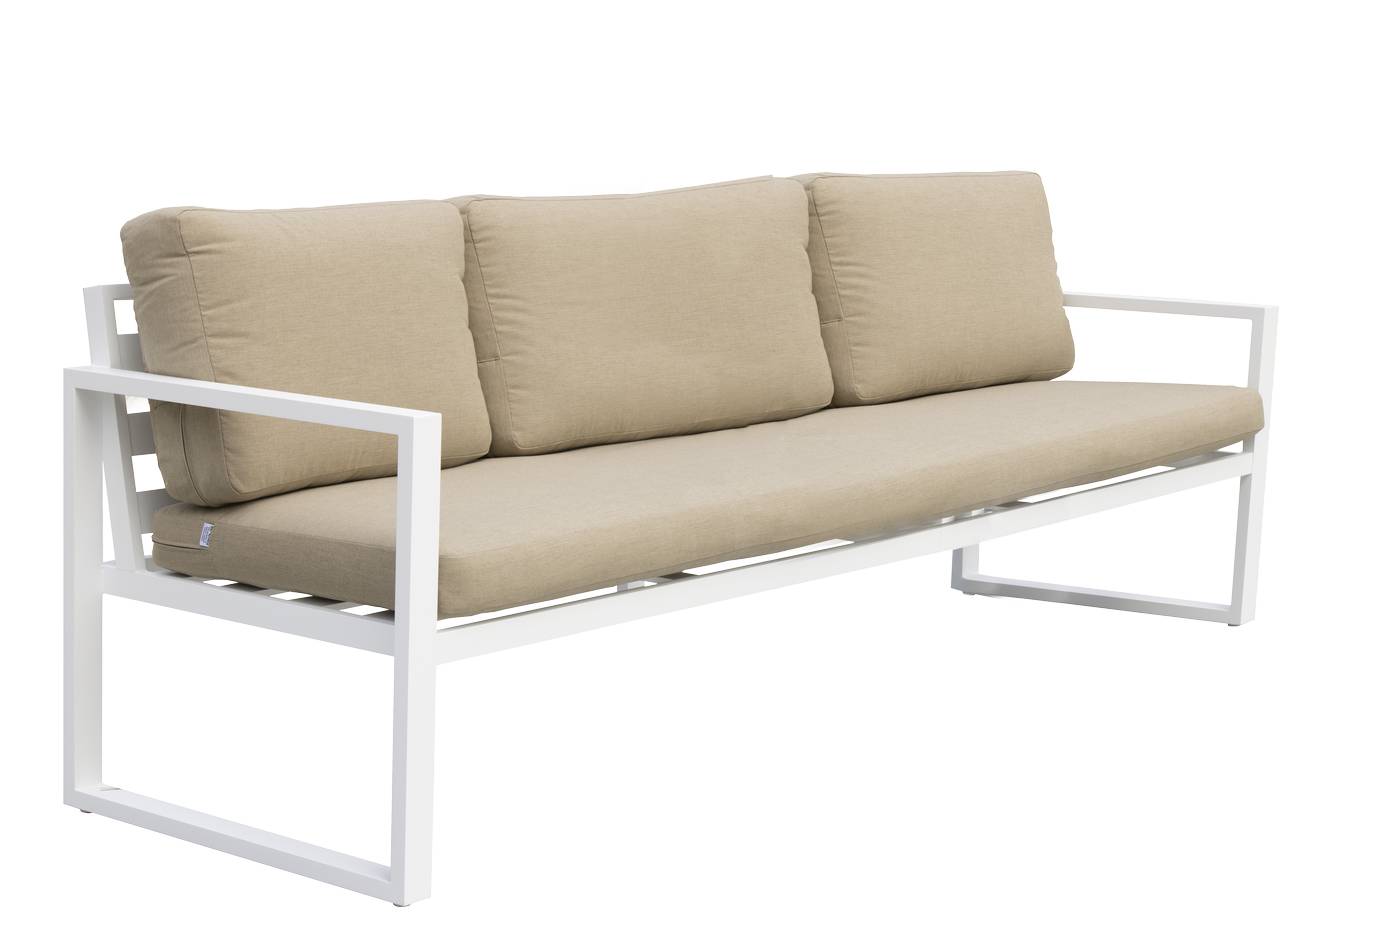 Set Aluminio Fenix-10 - Conjunto aluminio: 1 sofá 3 plazas + 2 sillones + 1 mesa de centro + 2 reposapiés. Disponible en cinco colores diferentes.